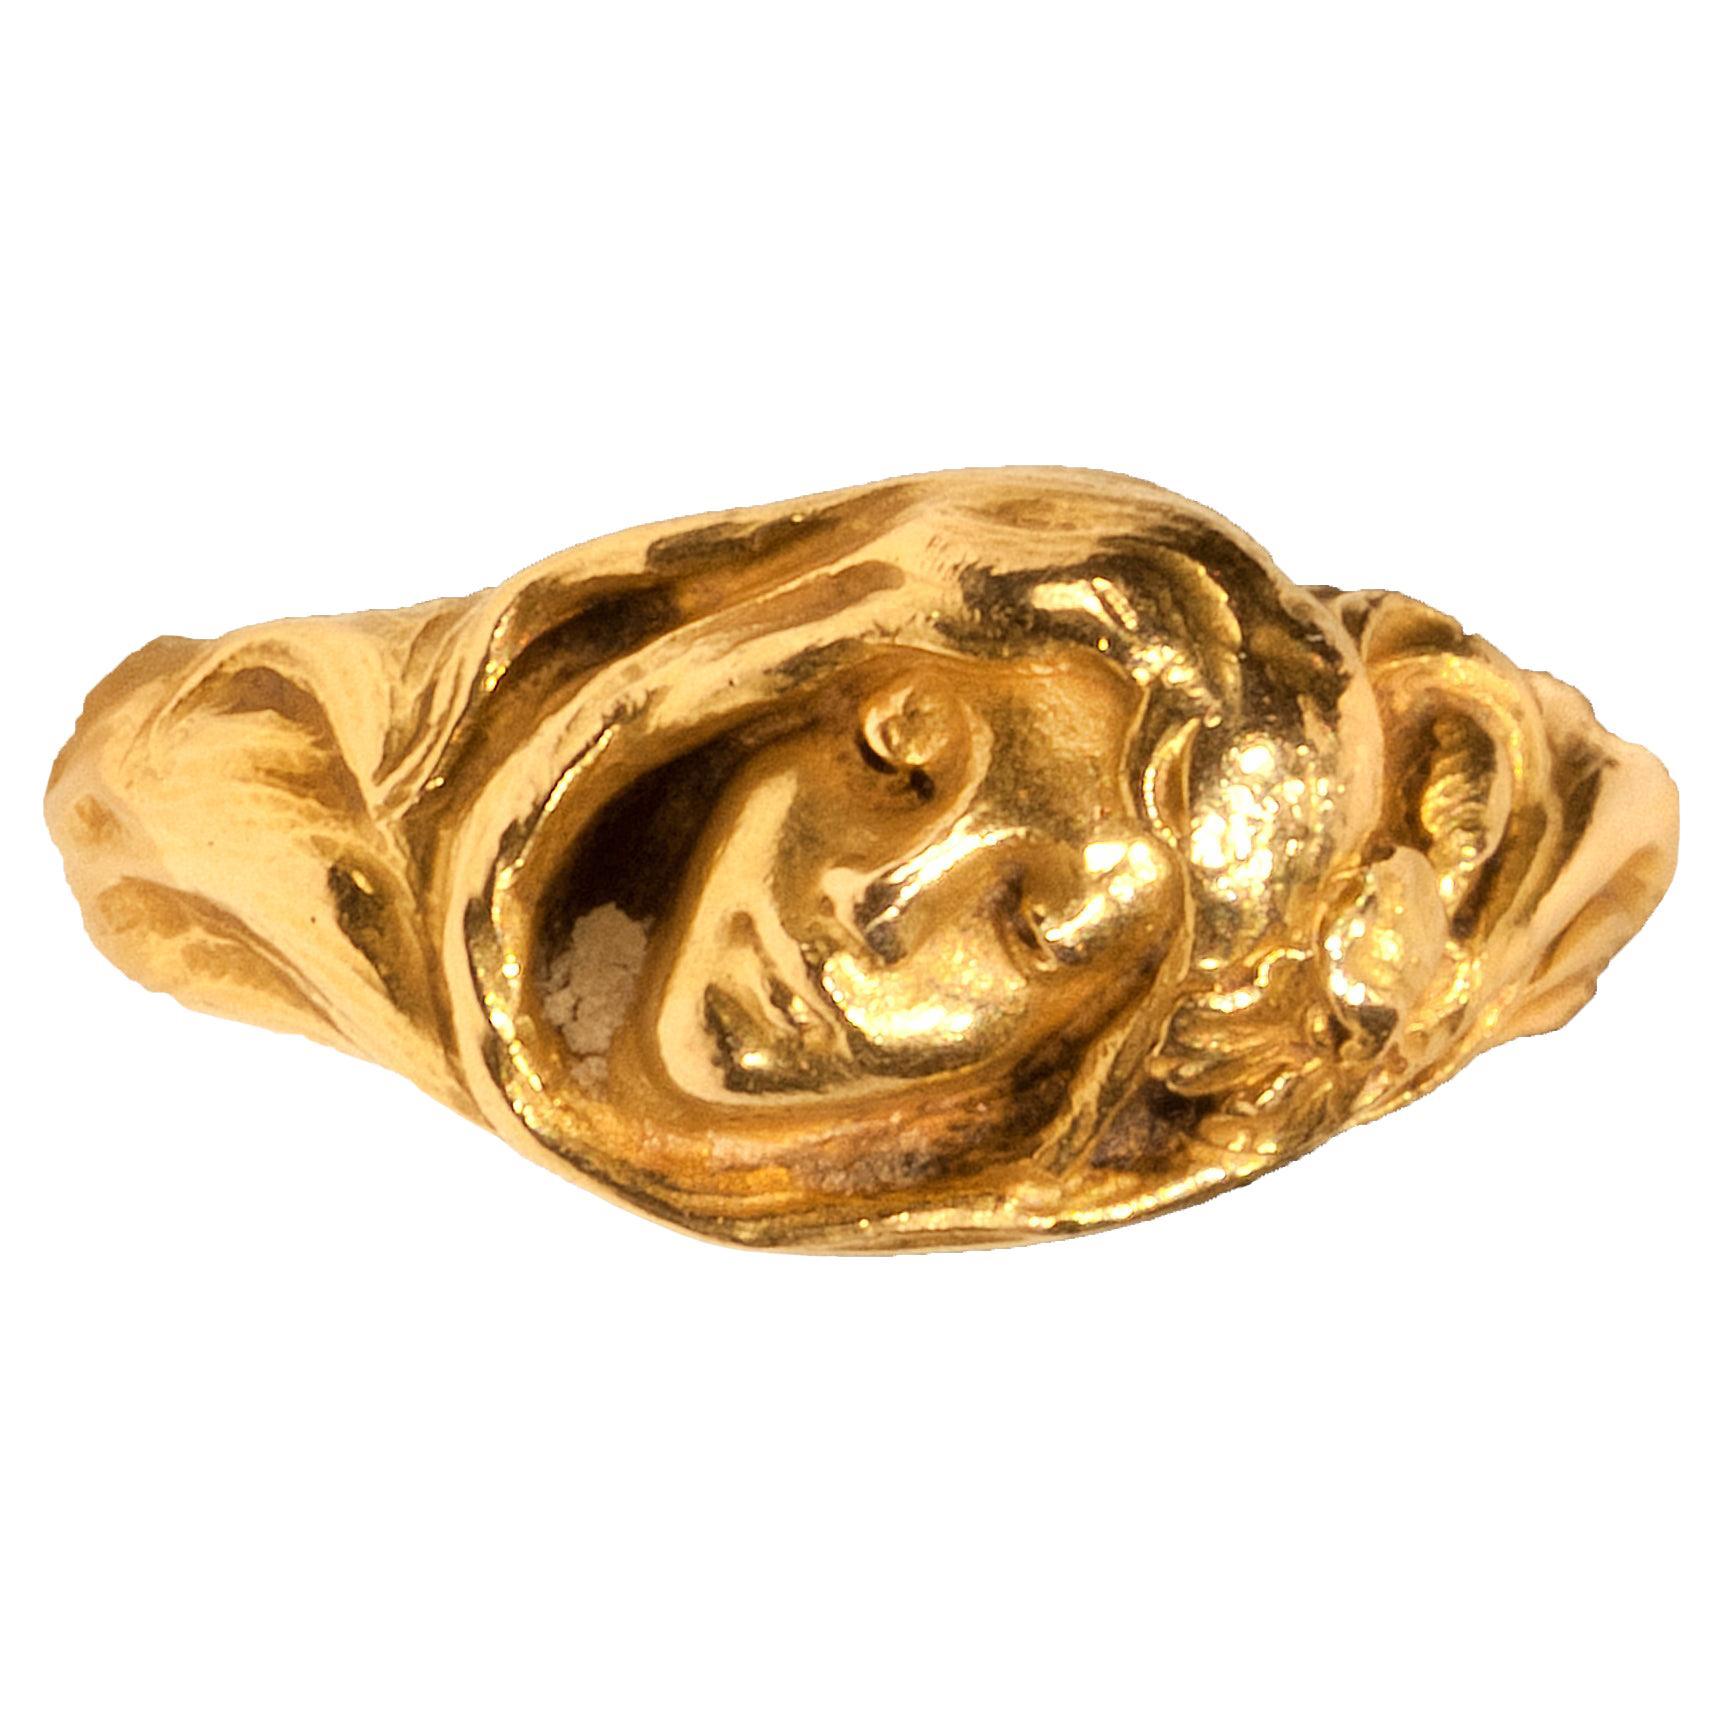 Antiker französischer Jugendstil-Ring aus Gold